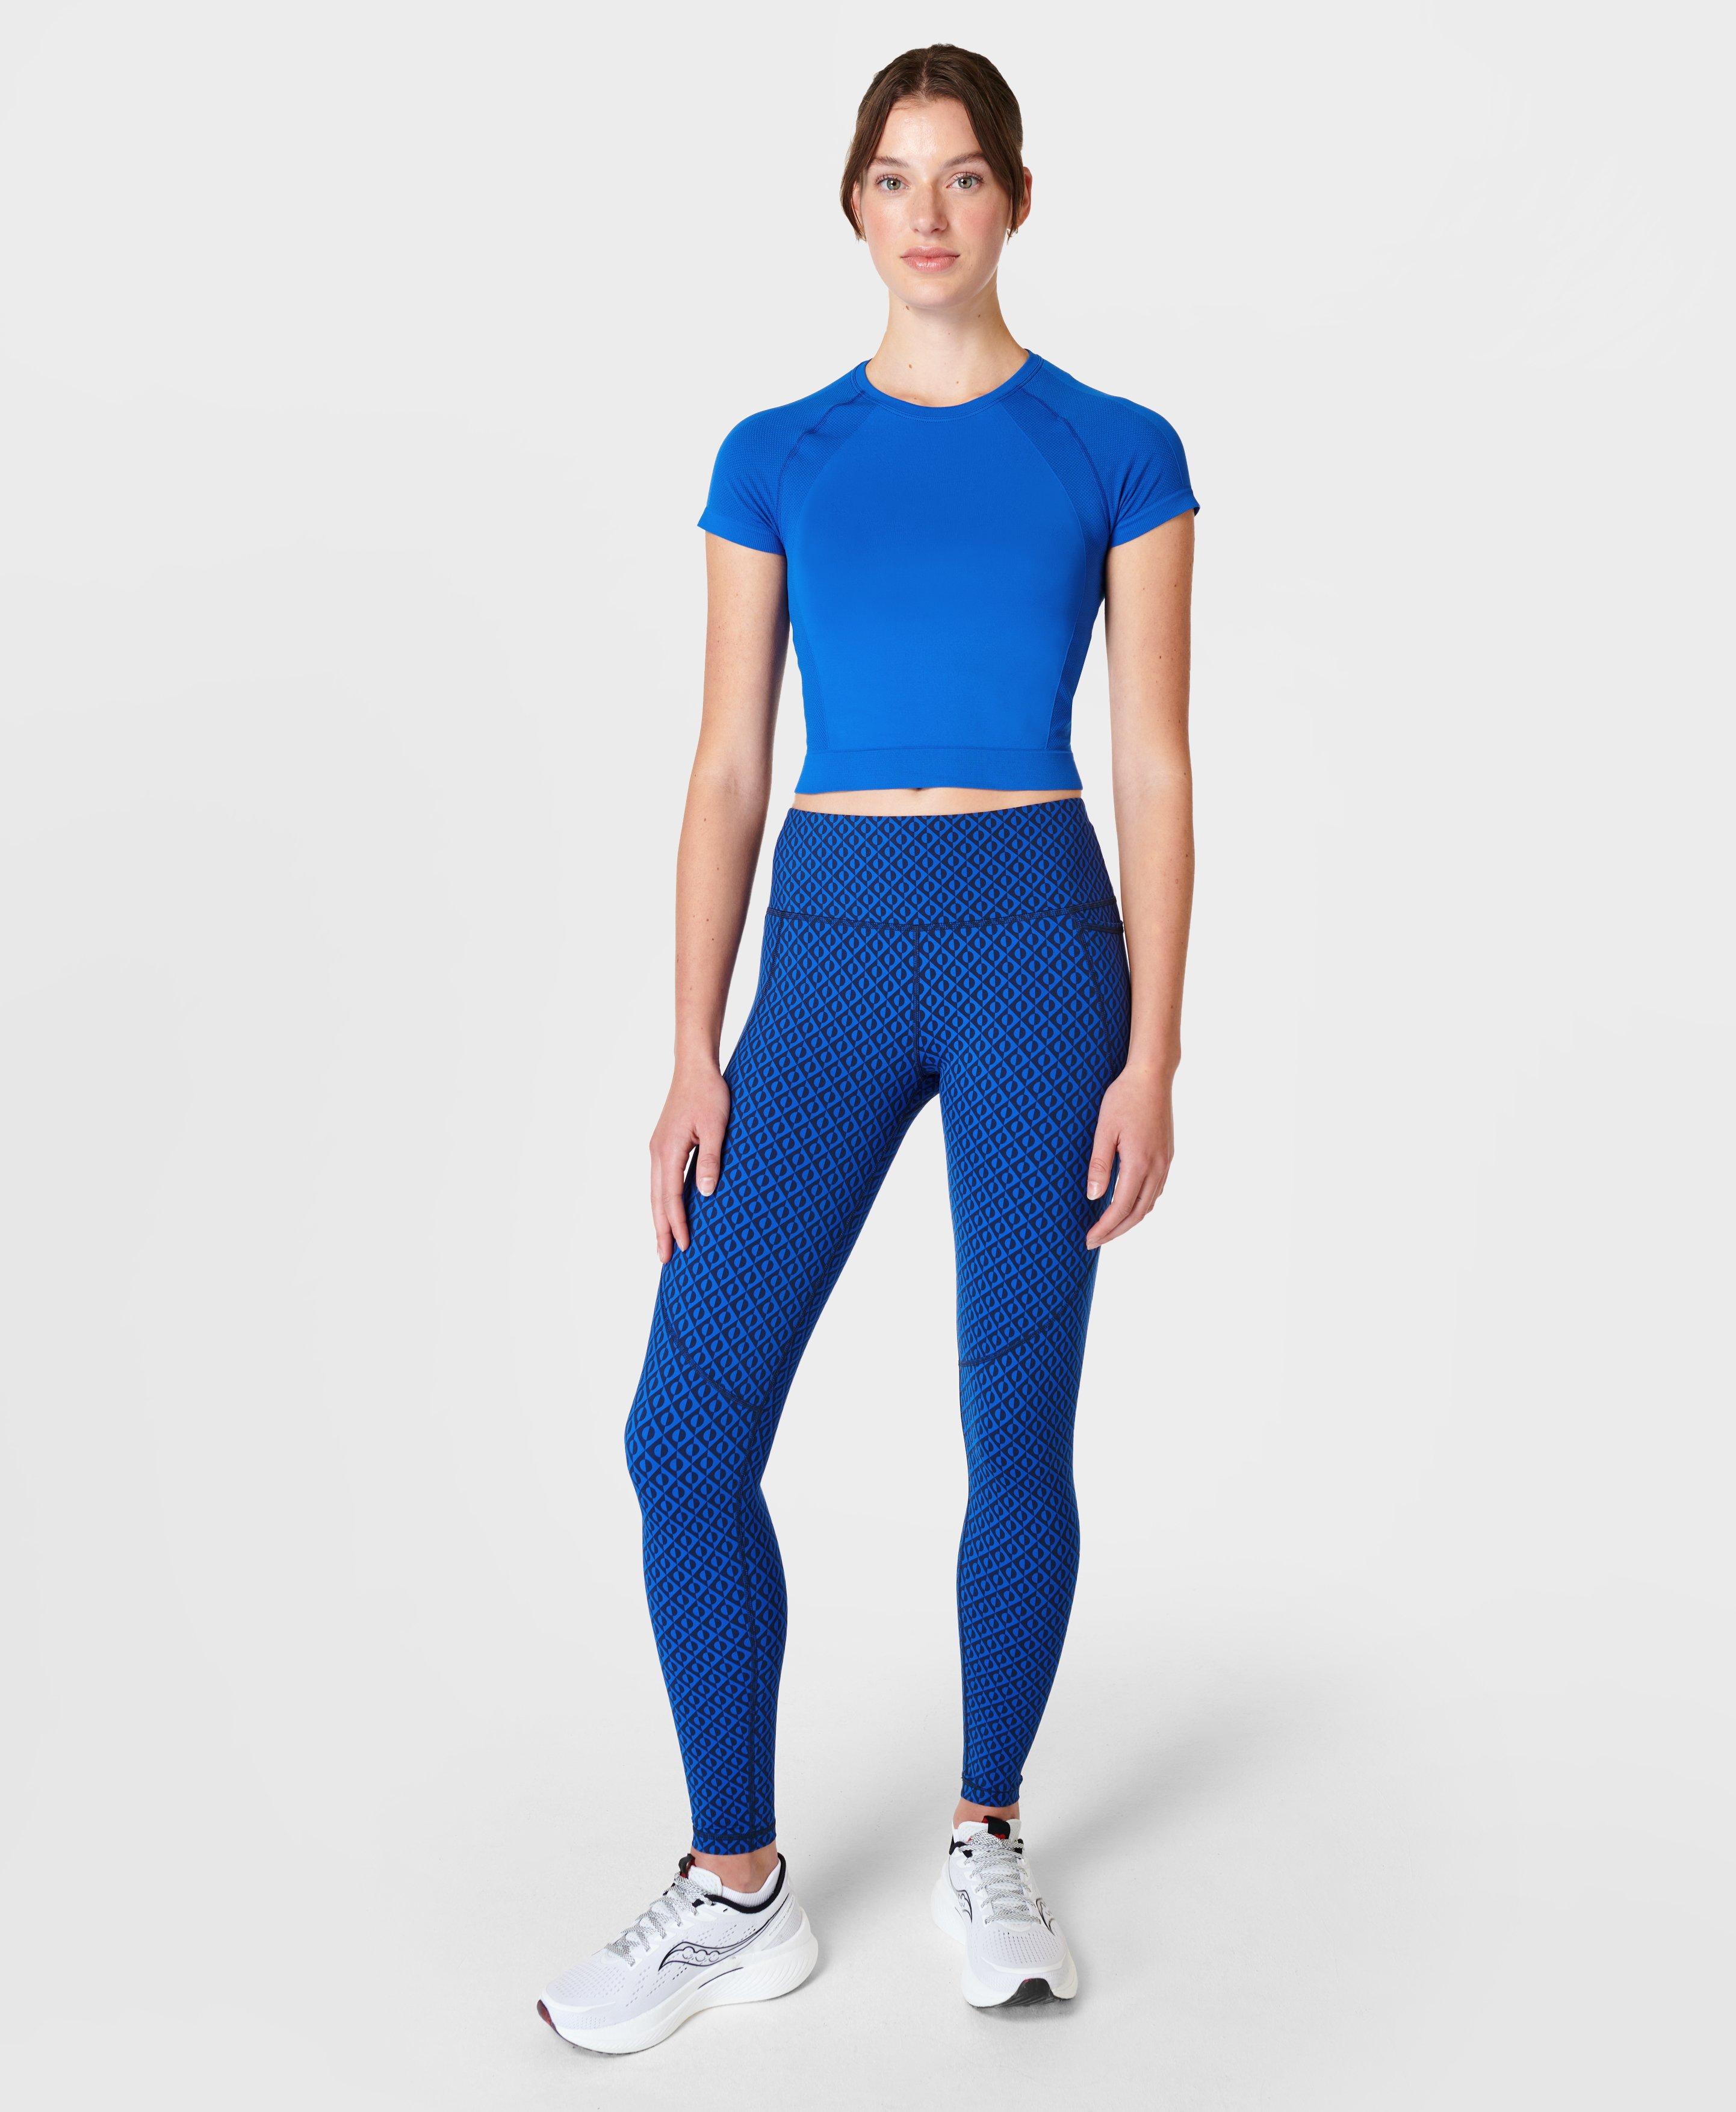 Power Gym Leggings - Blue Gradient Tiger Print, Women's Leggings